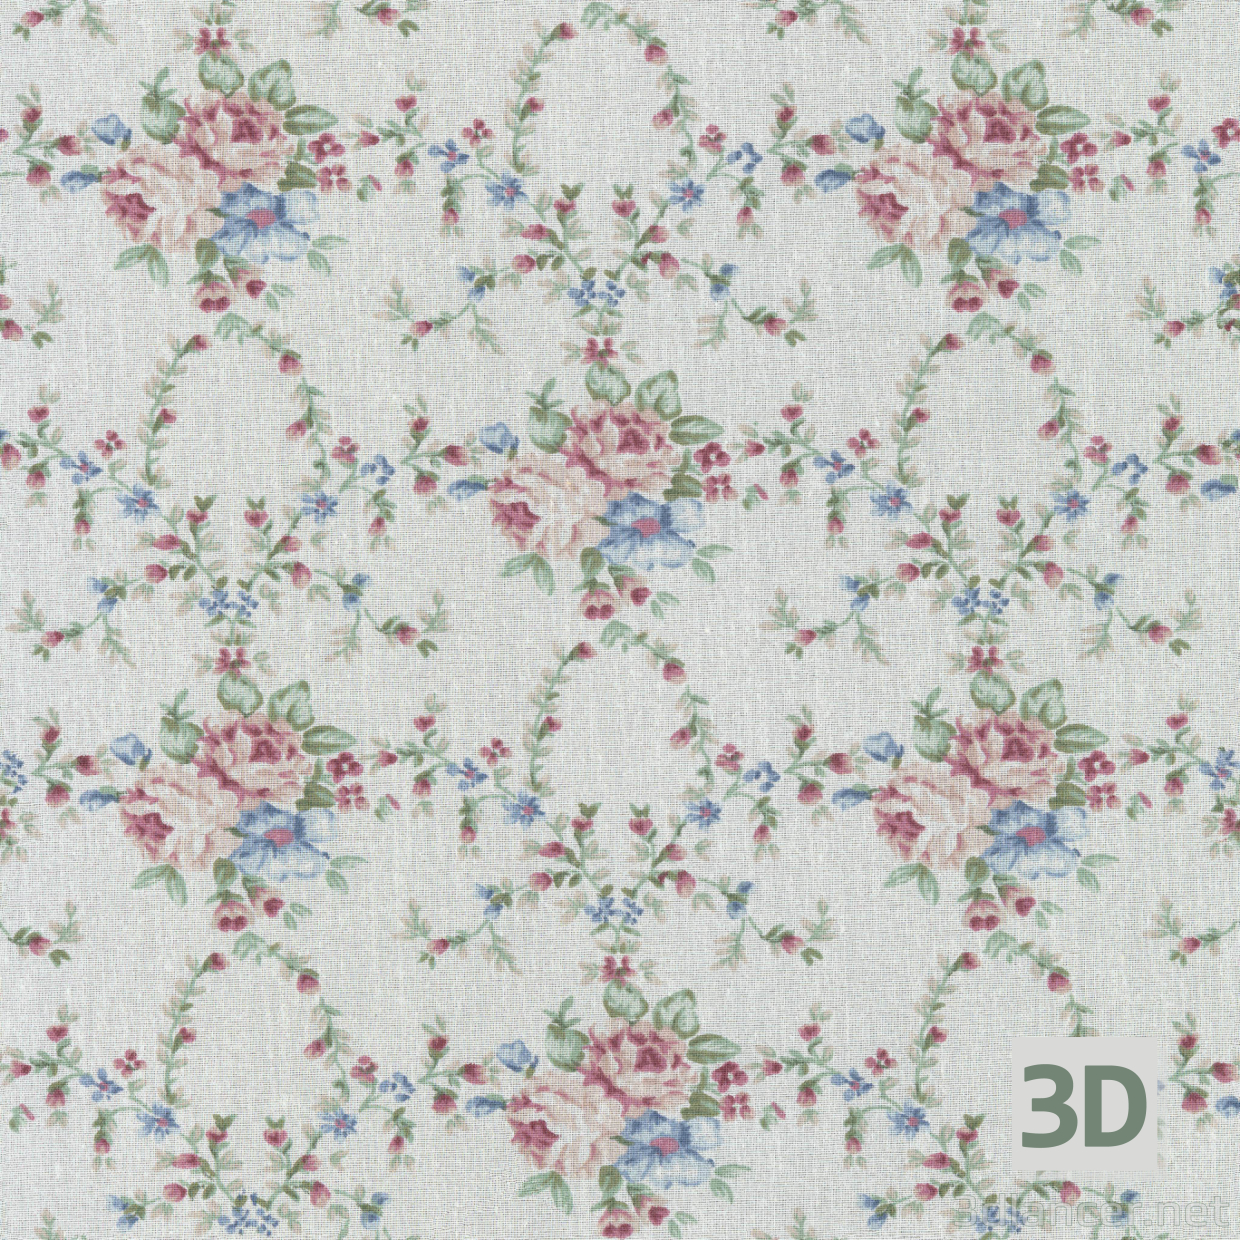 Texture textile 54 free download - image